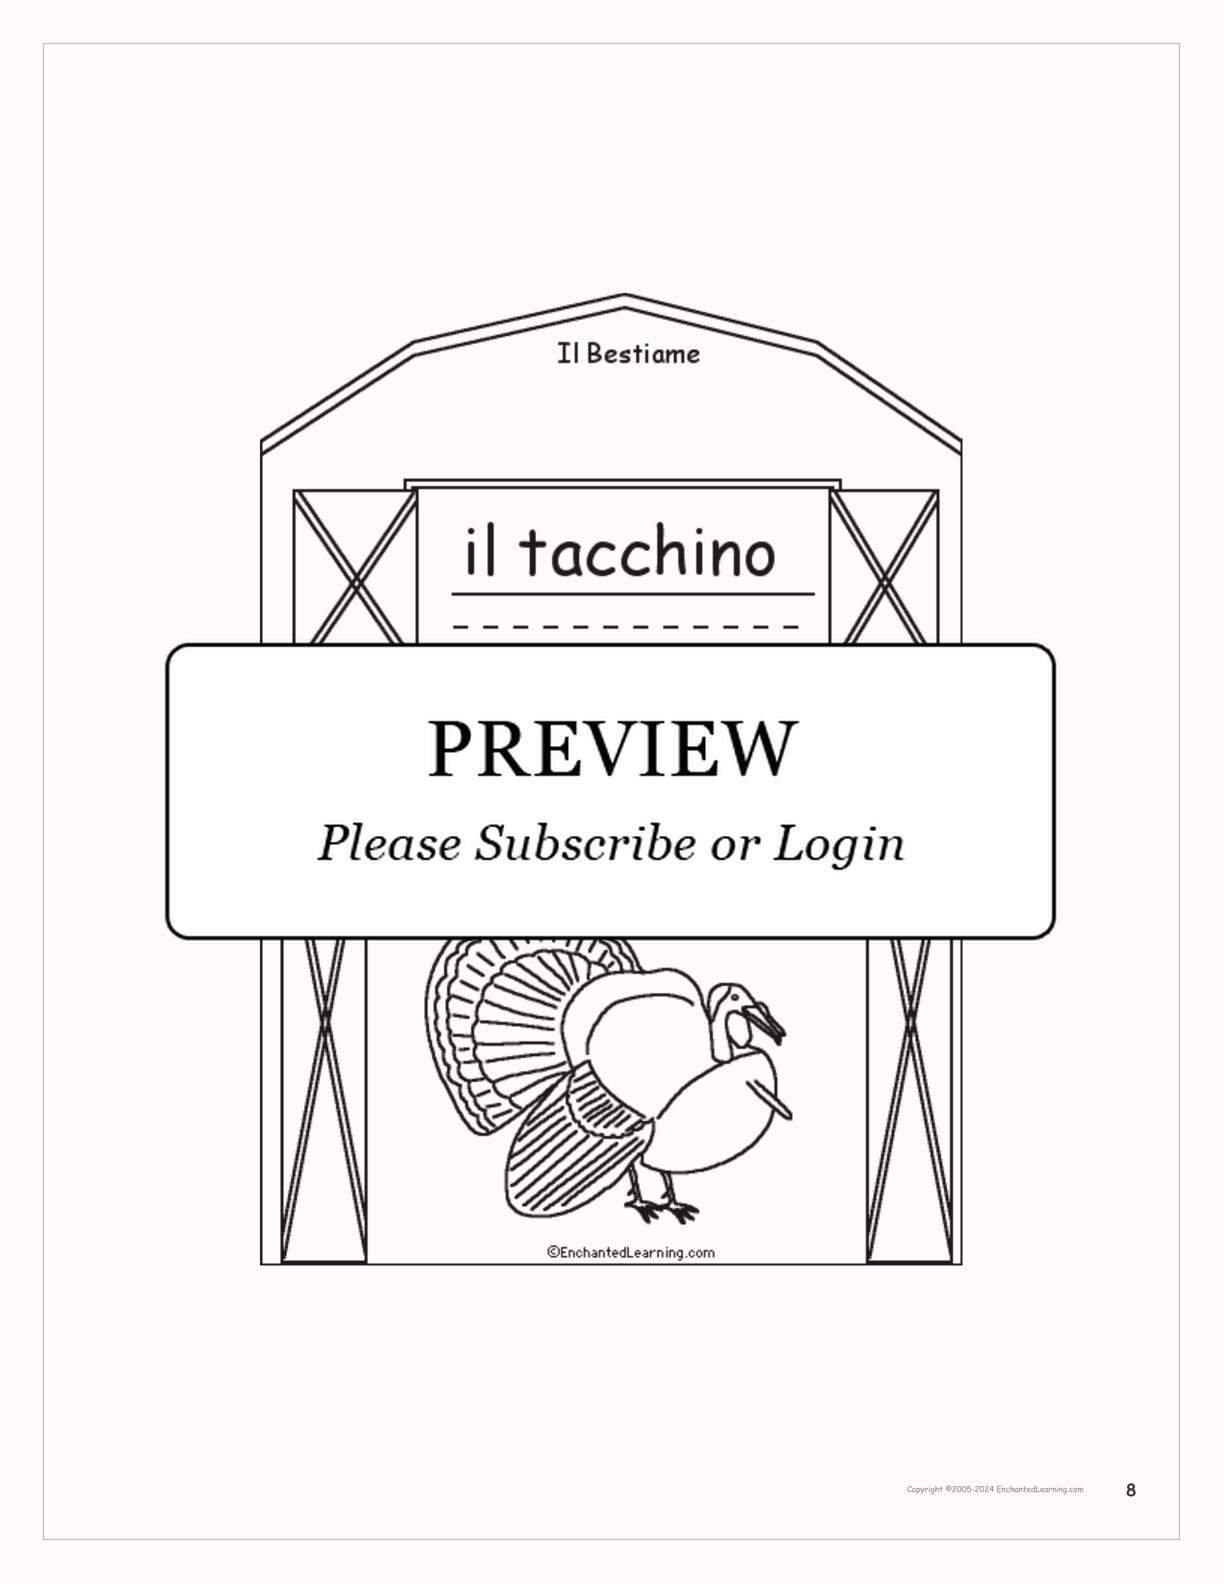 Bestiame/Livestock Italian Book interactive printout page 8